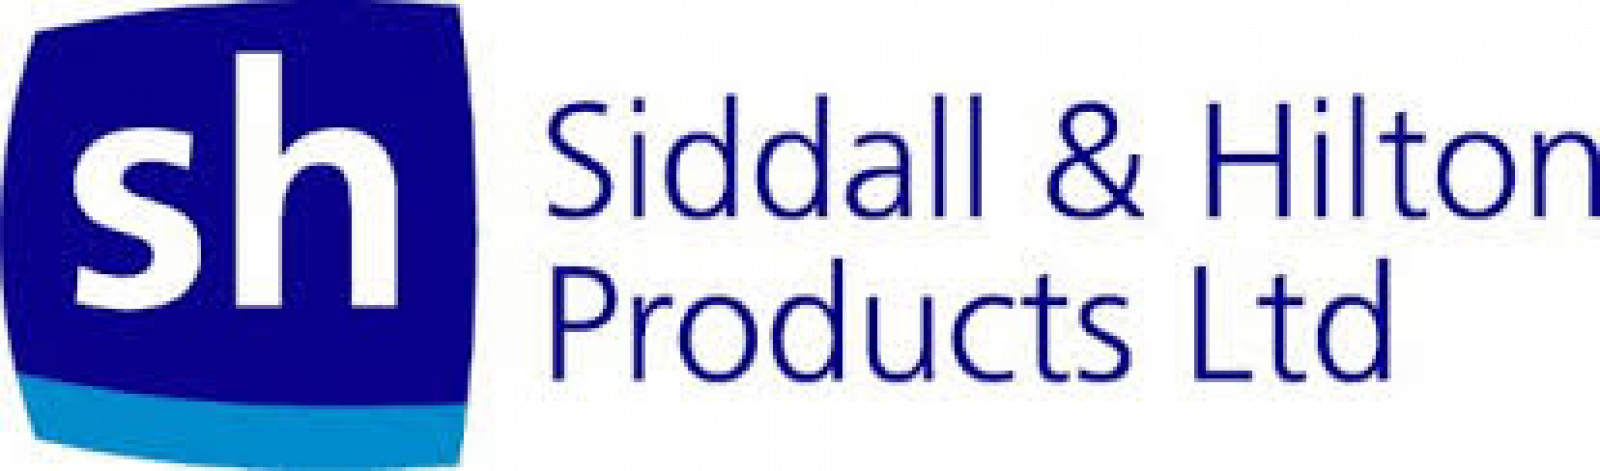 #Introducing: Siddall & Hilton Products Ltd